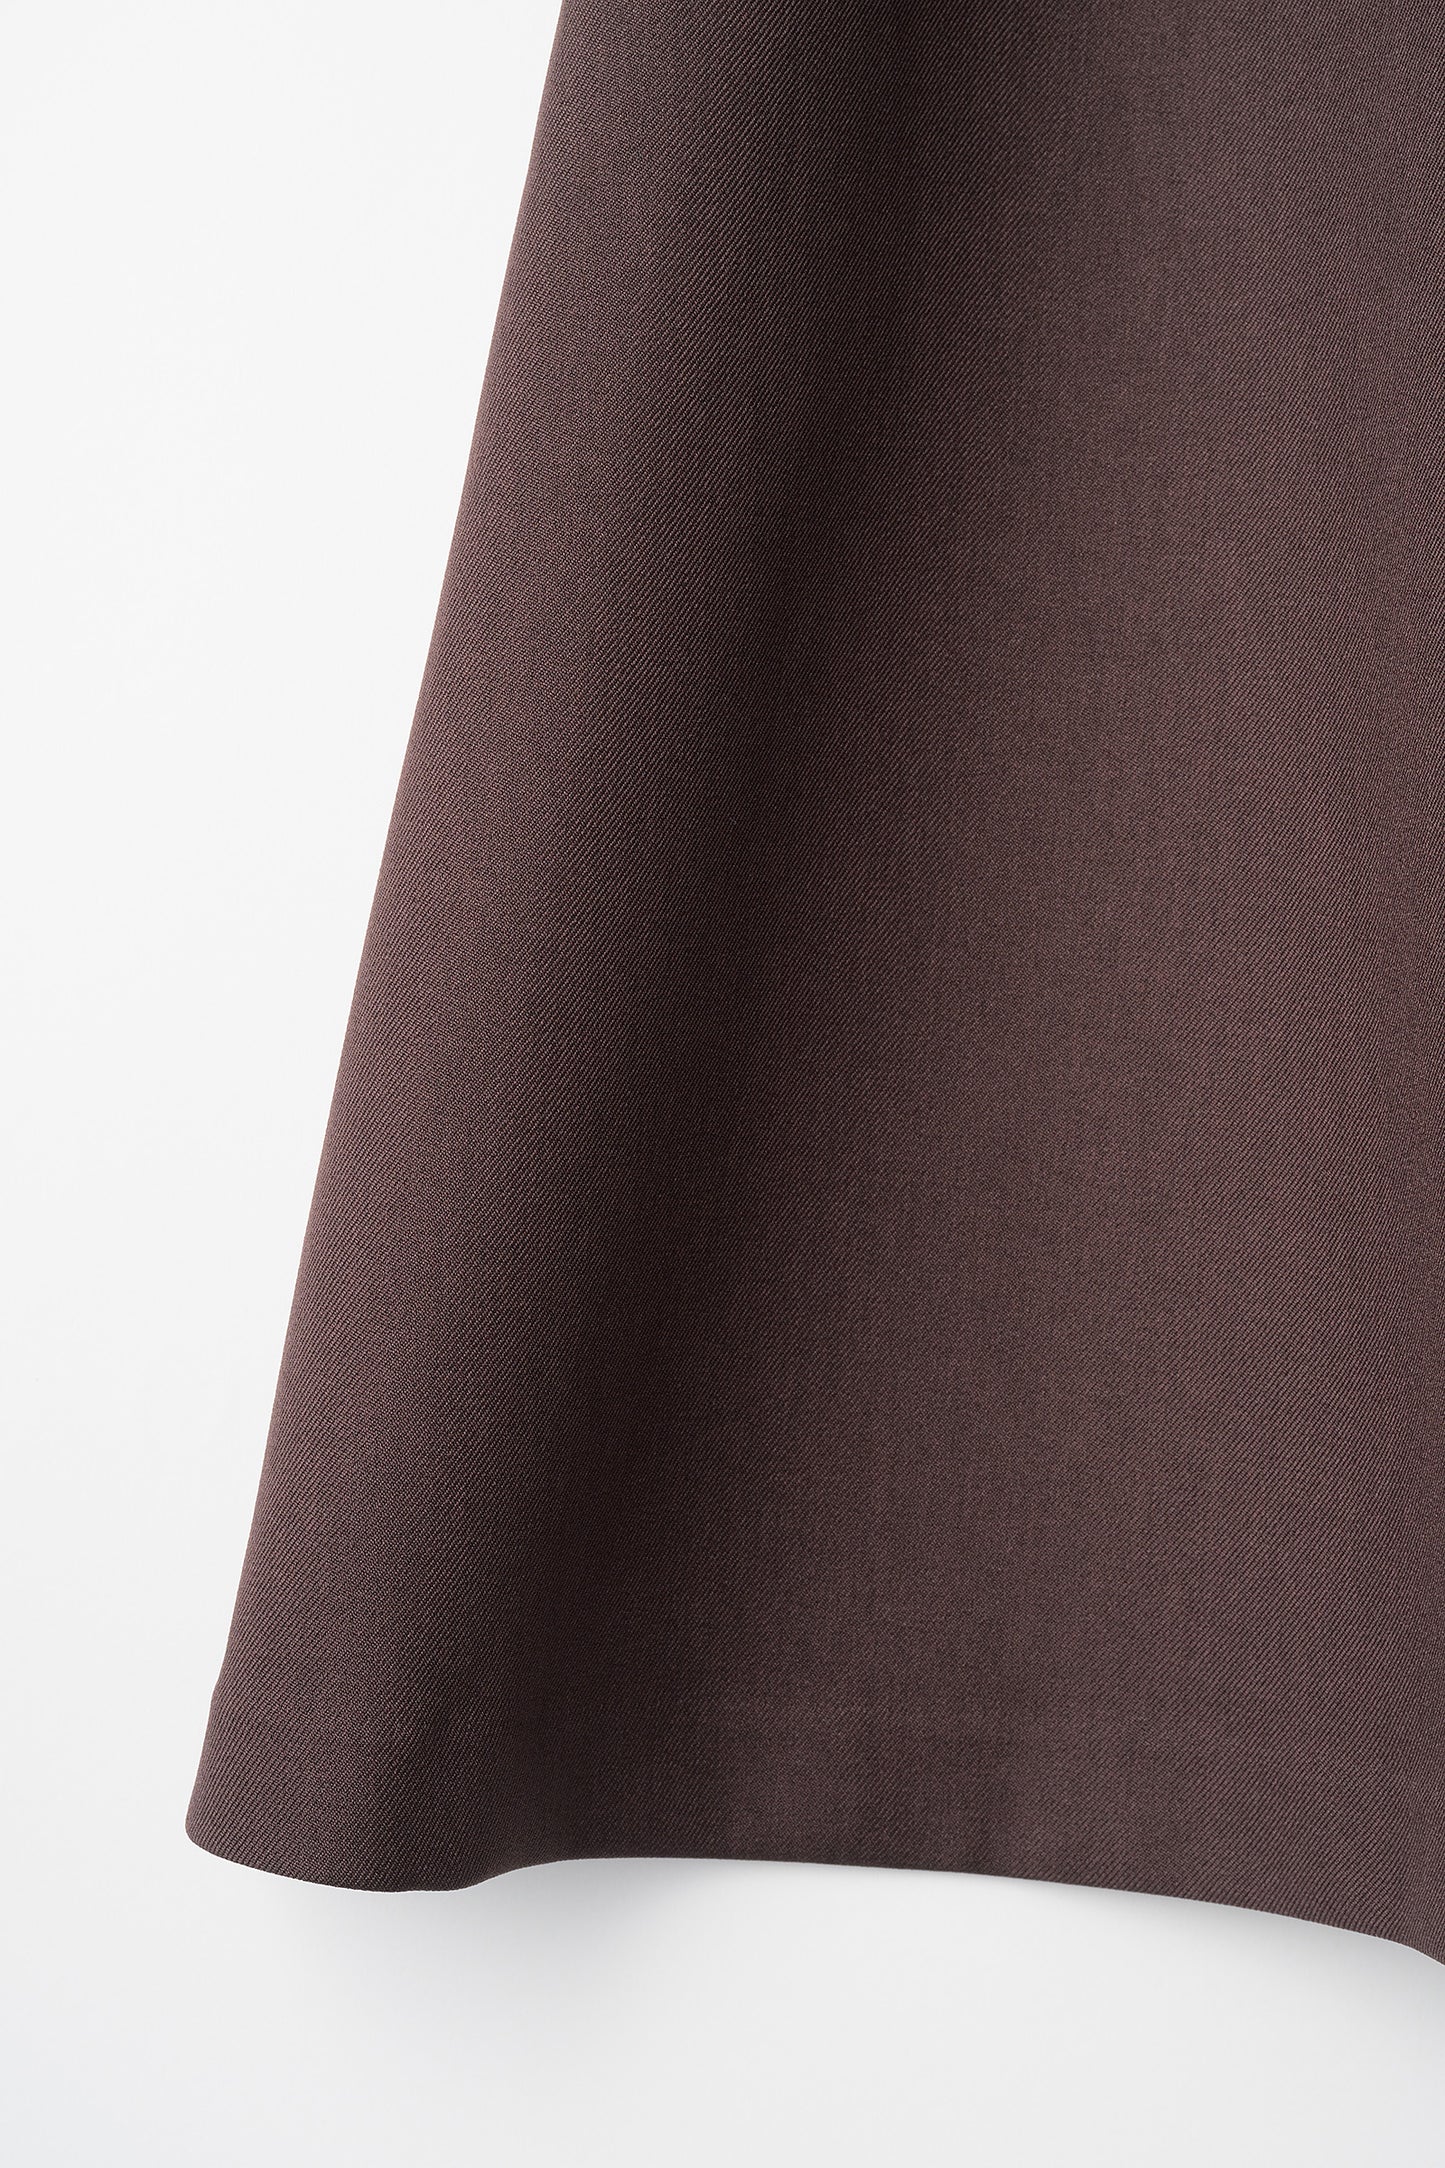 Noble high-waist skirt (Dark brown)